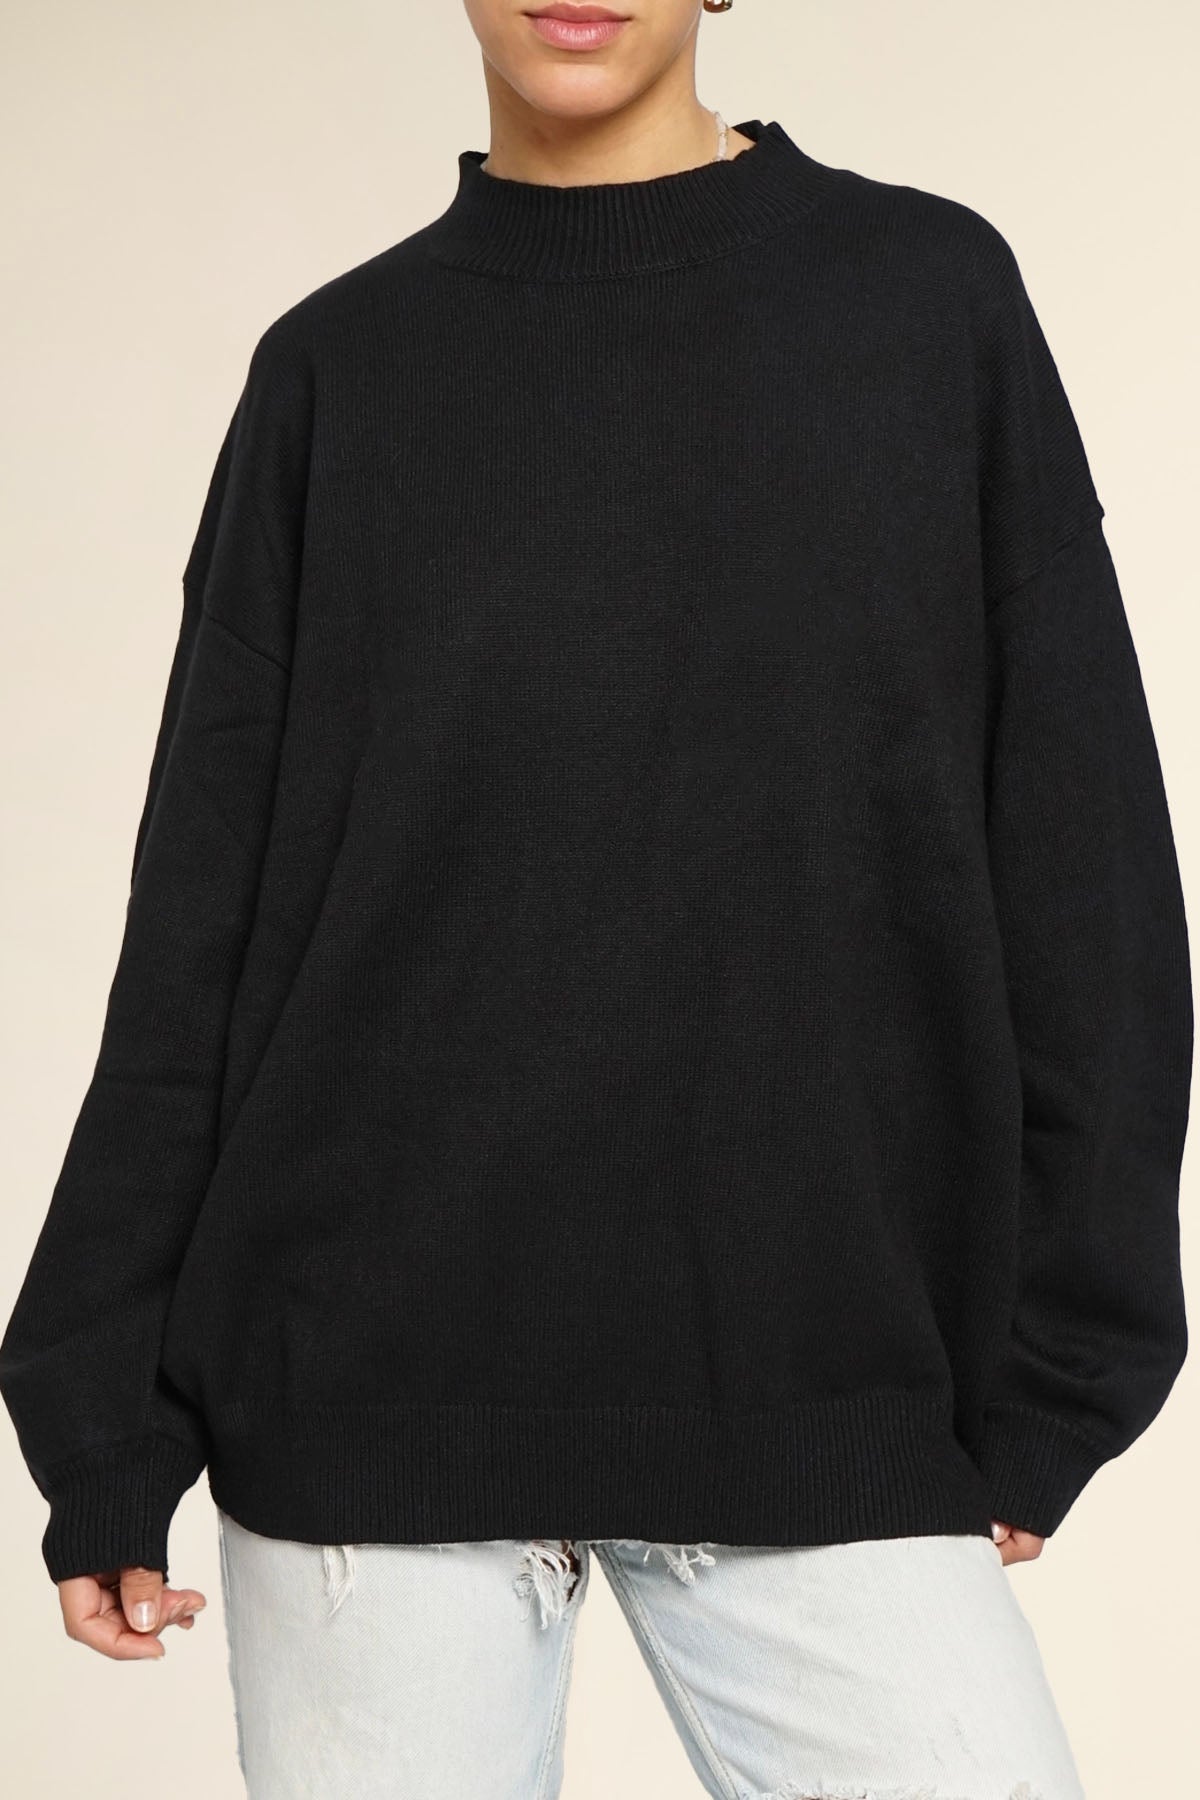 Camden Sweater - Black